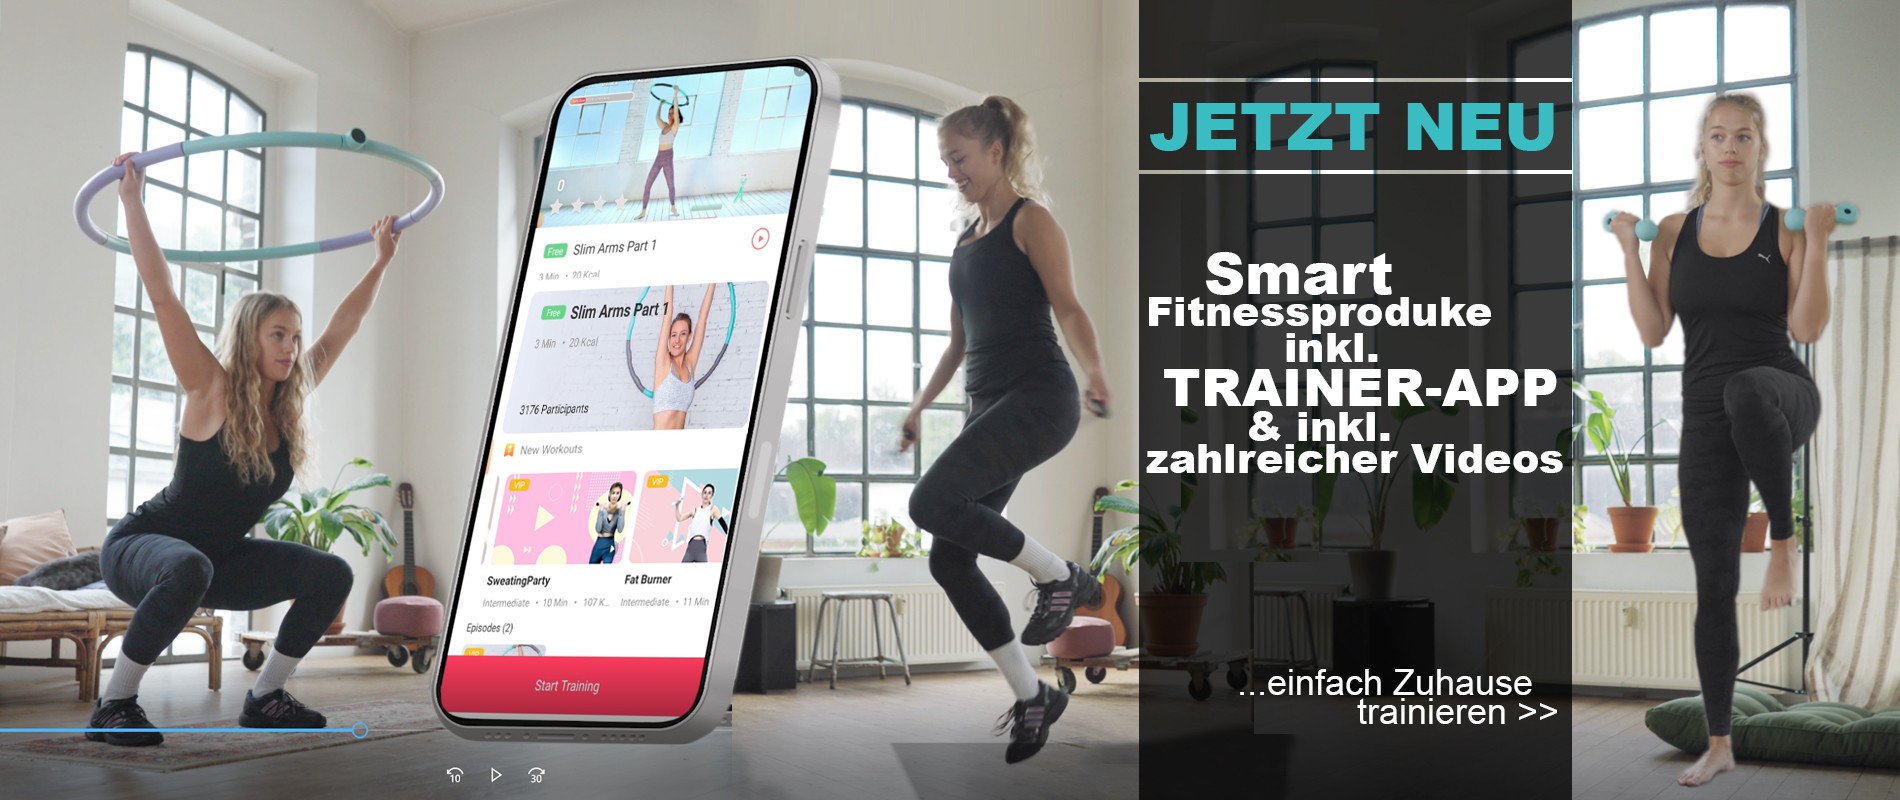 Smart Fitnessprodukte inkl. Trainings-App und Bluetooth-Modul